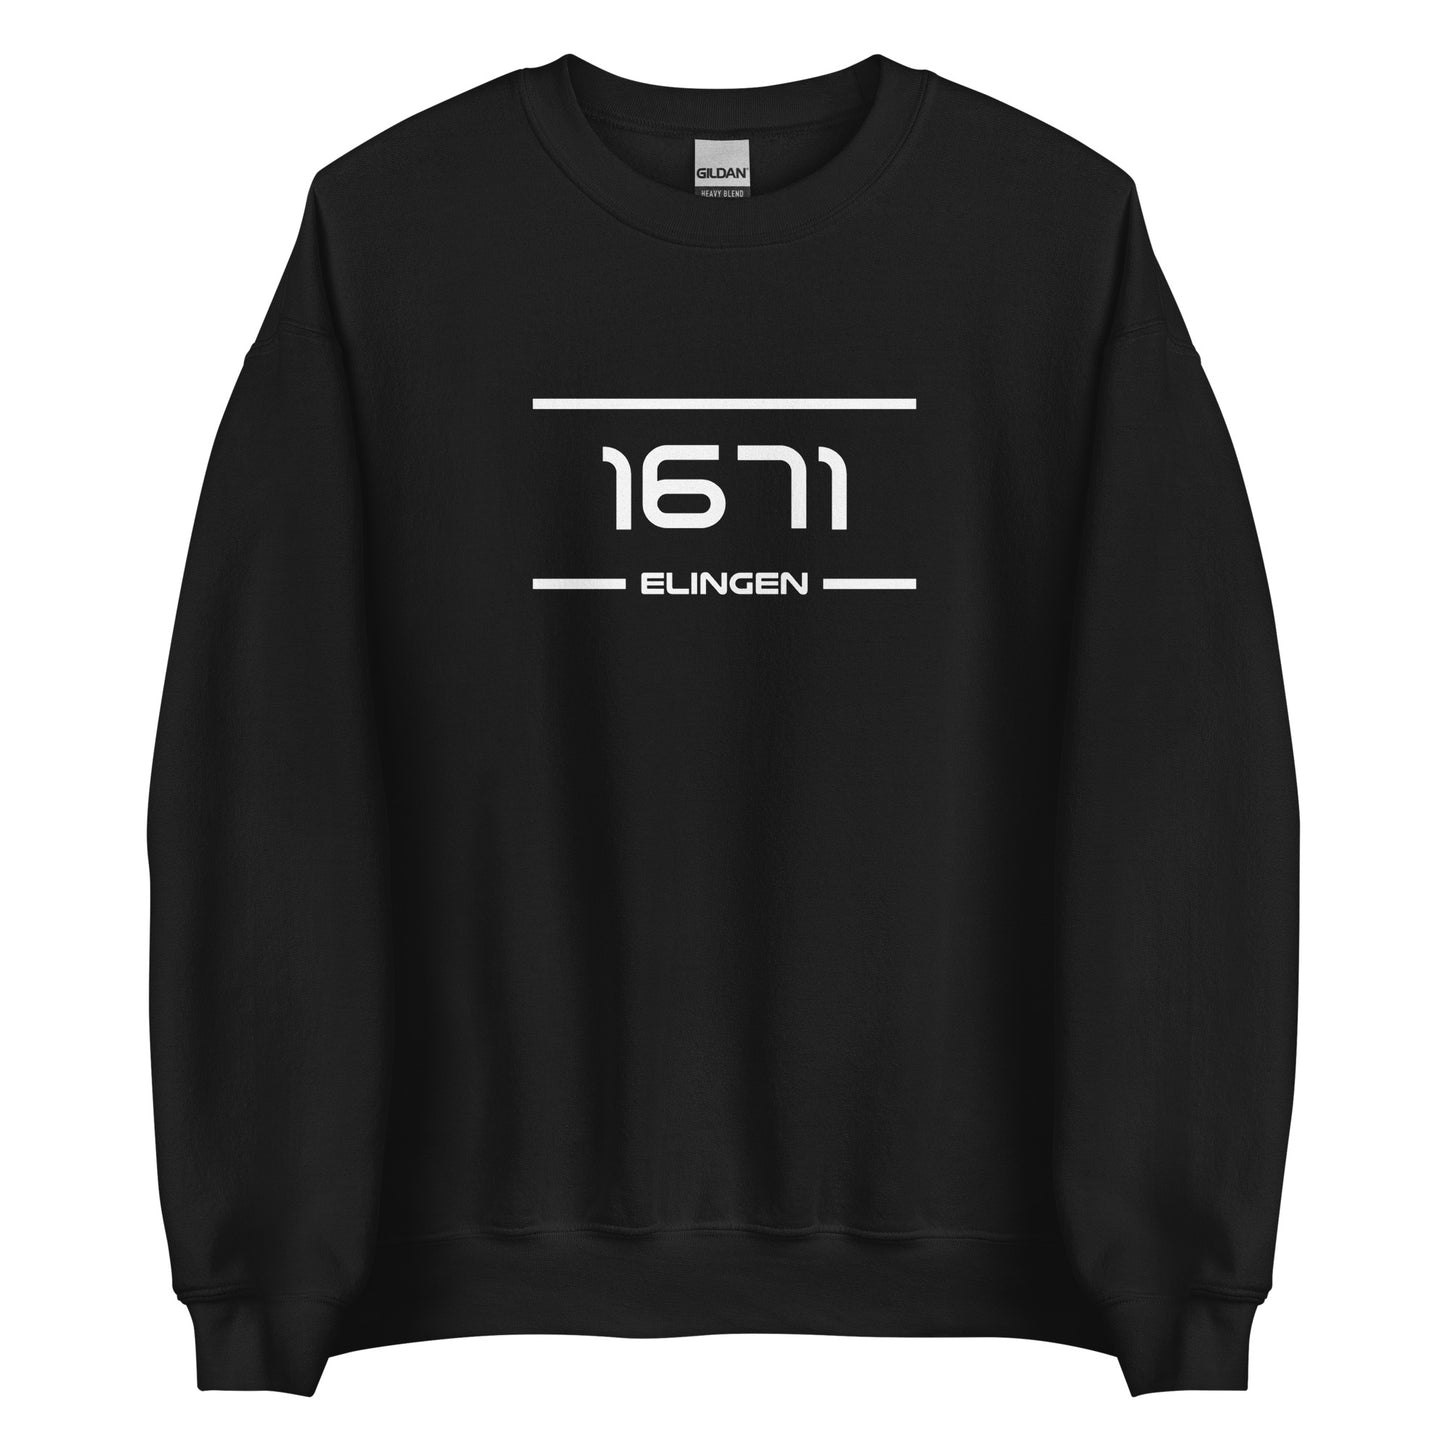 Sweater - 1671 - Elingen (M/V)